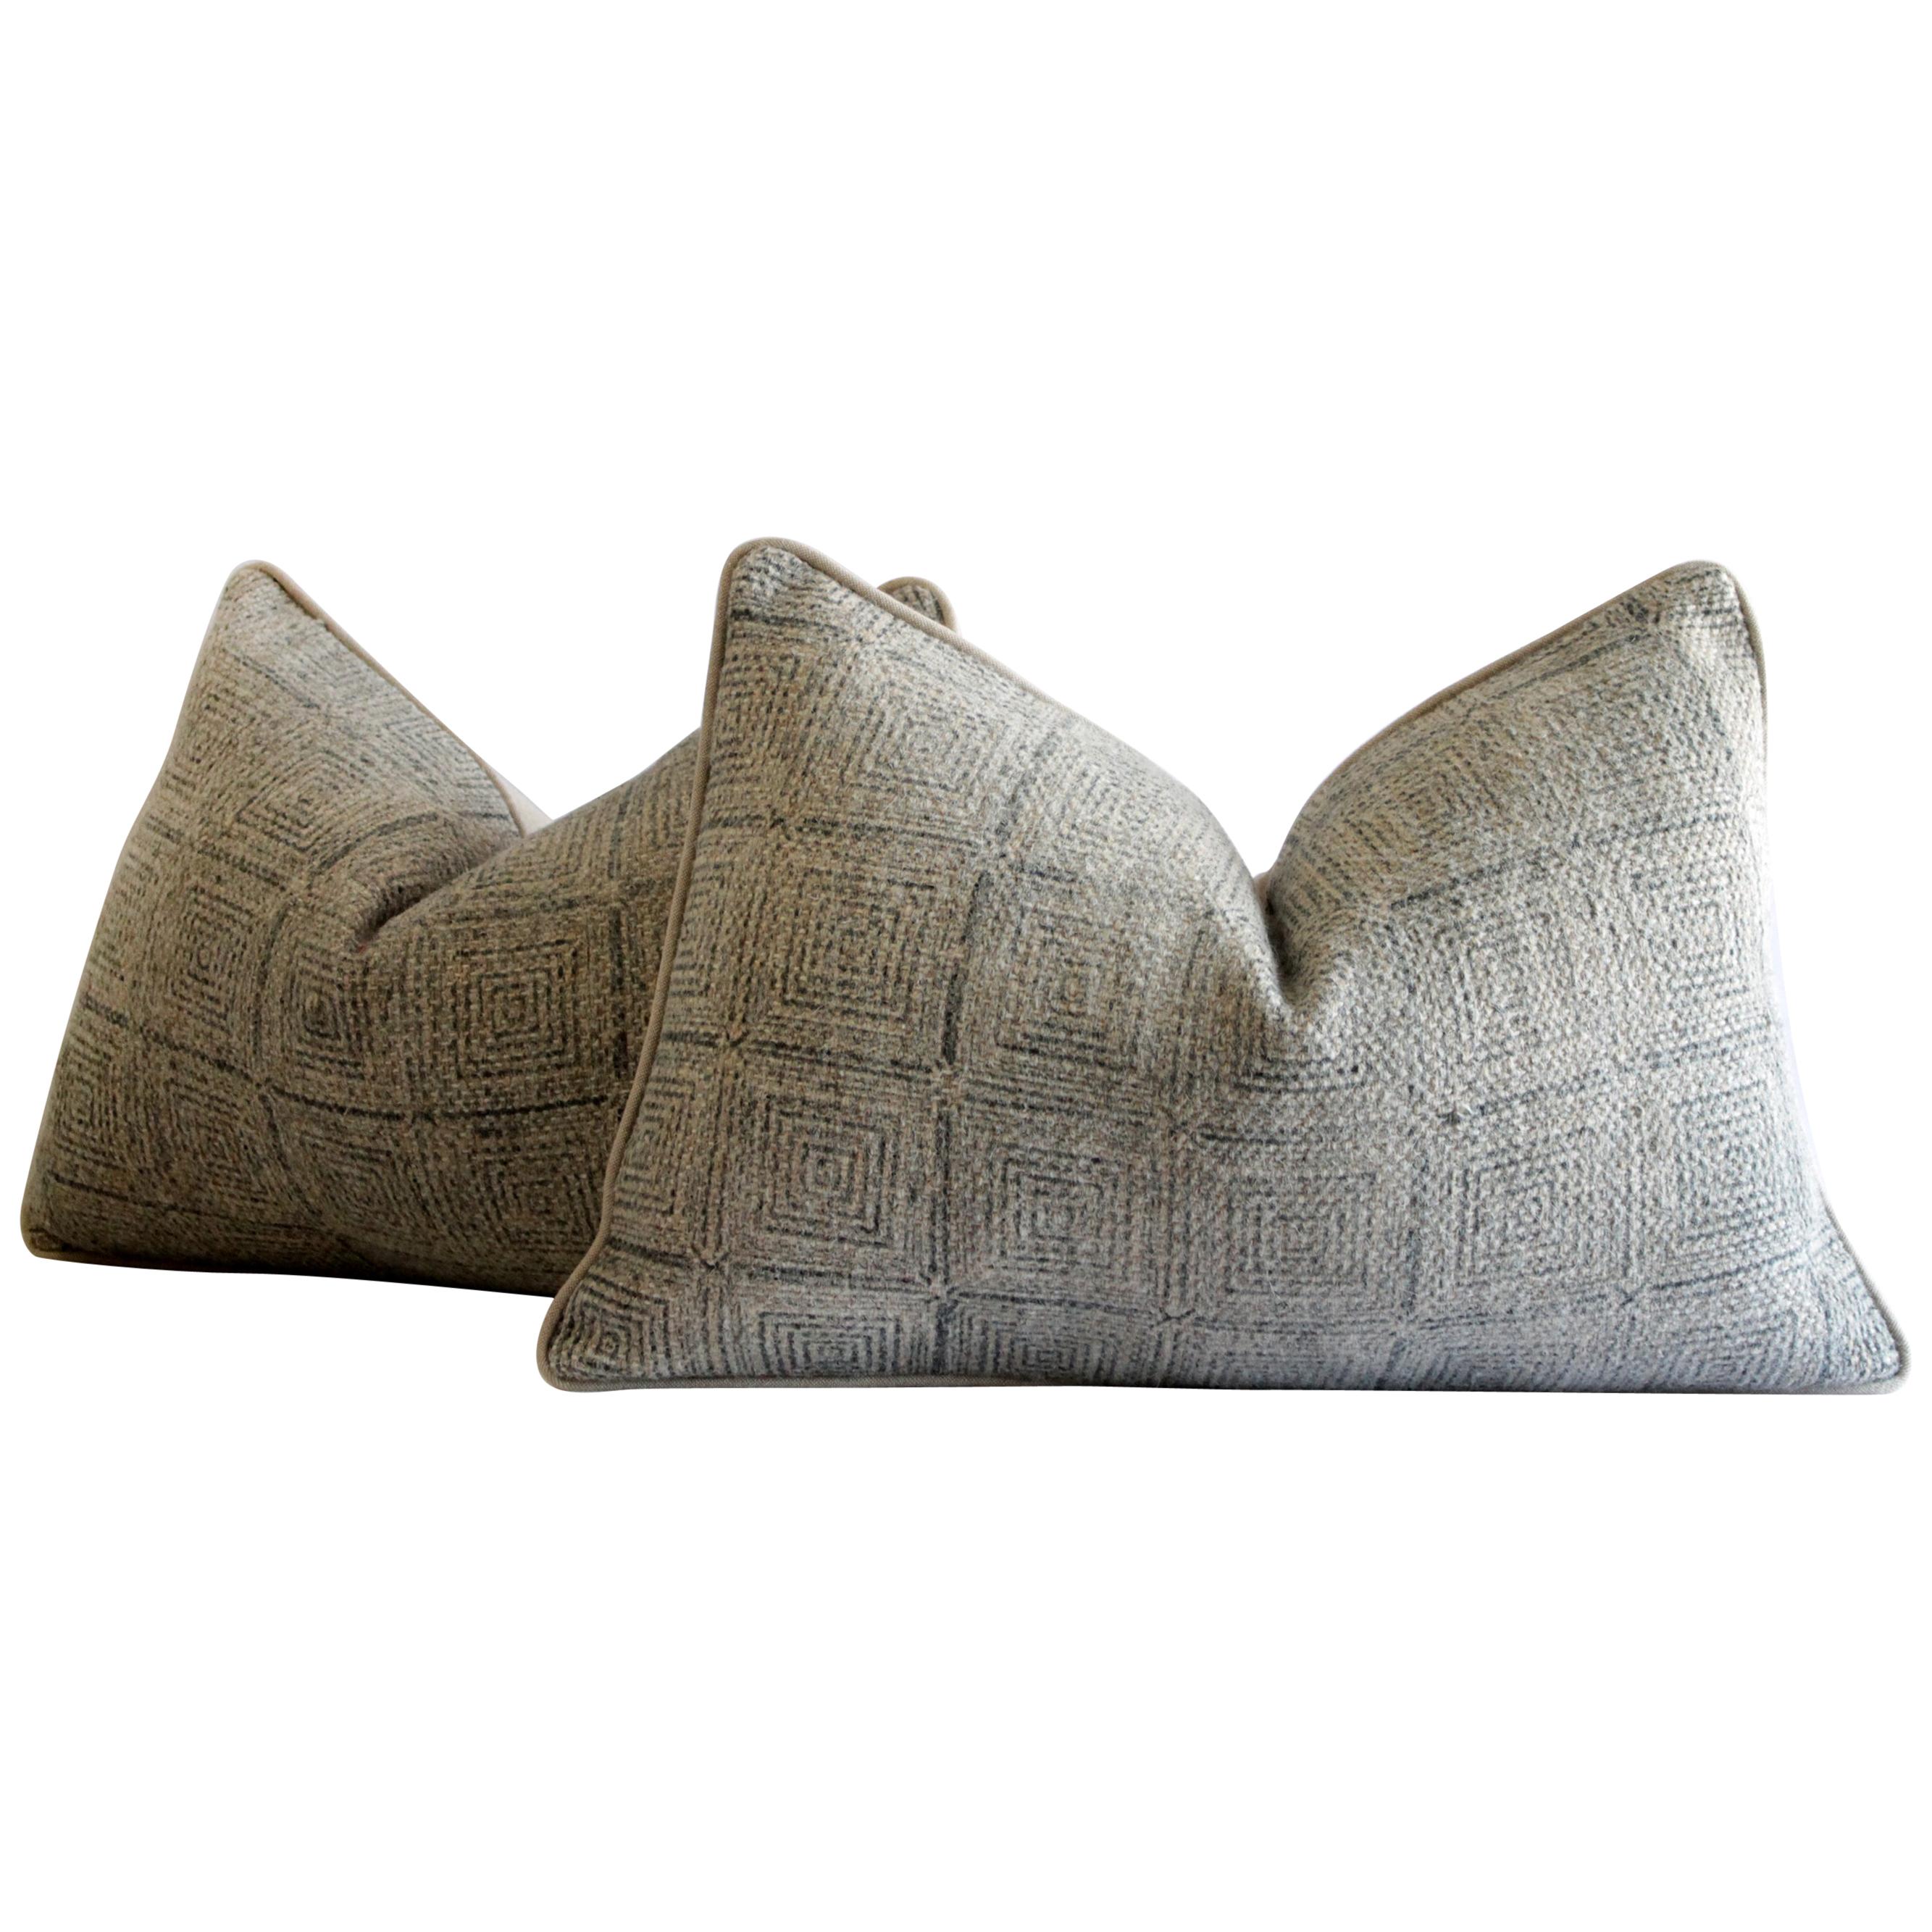 Wool Lumbar Pillows in Tan and Gray Pattern